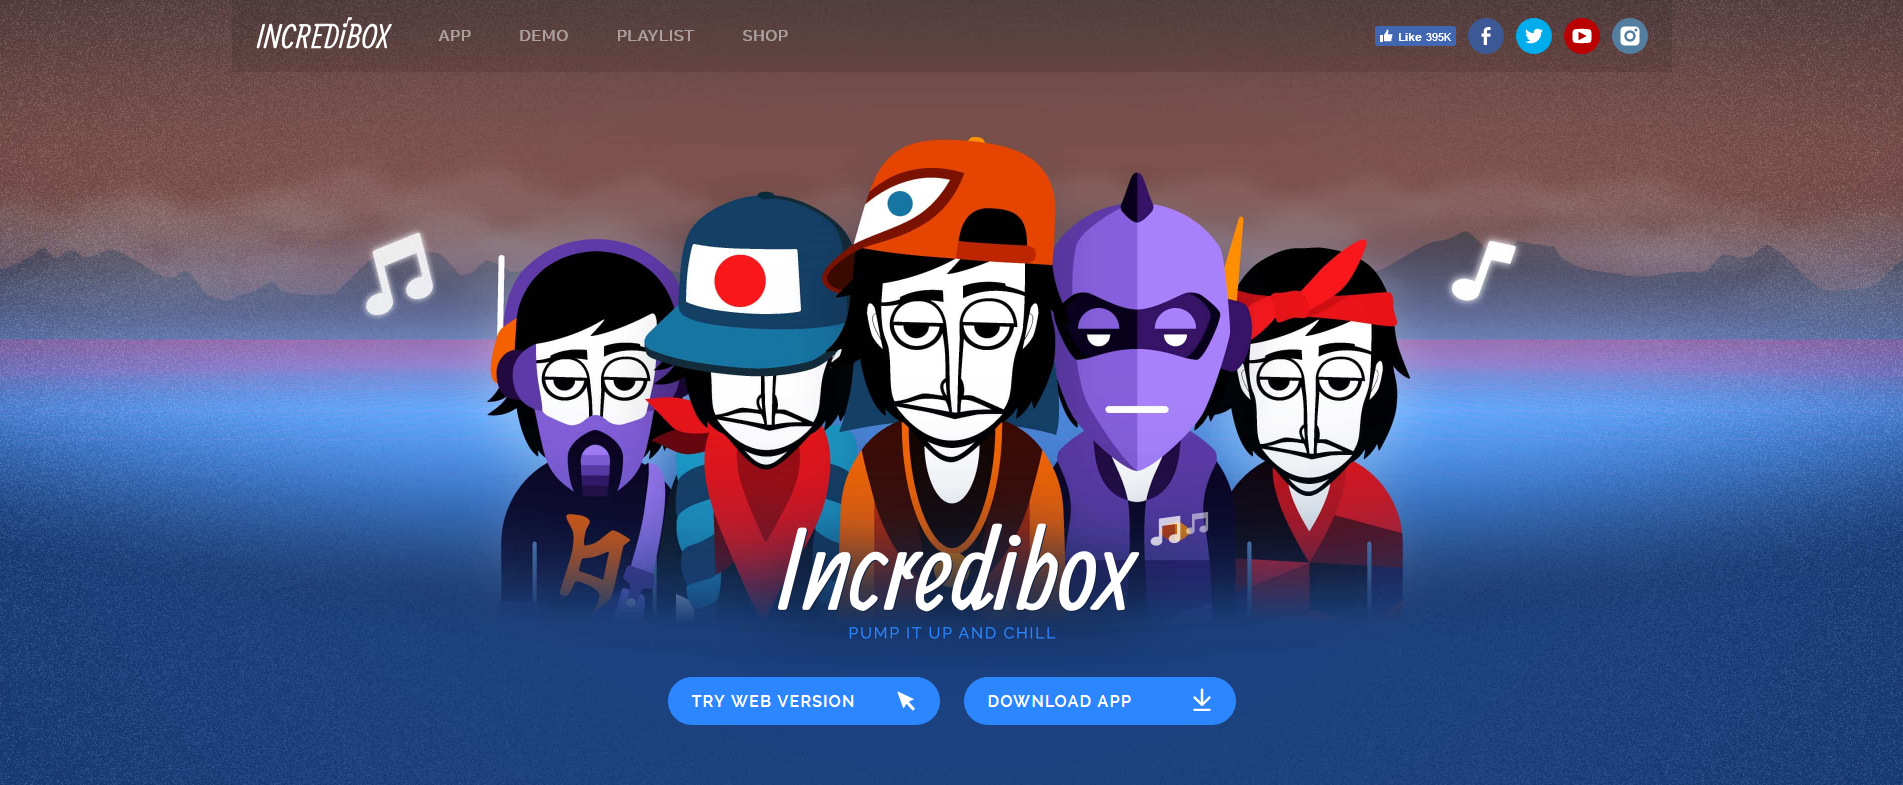 incredibox game online